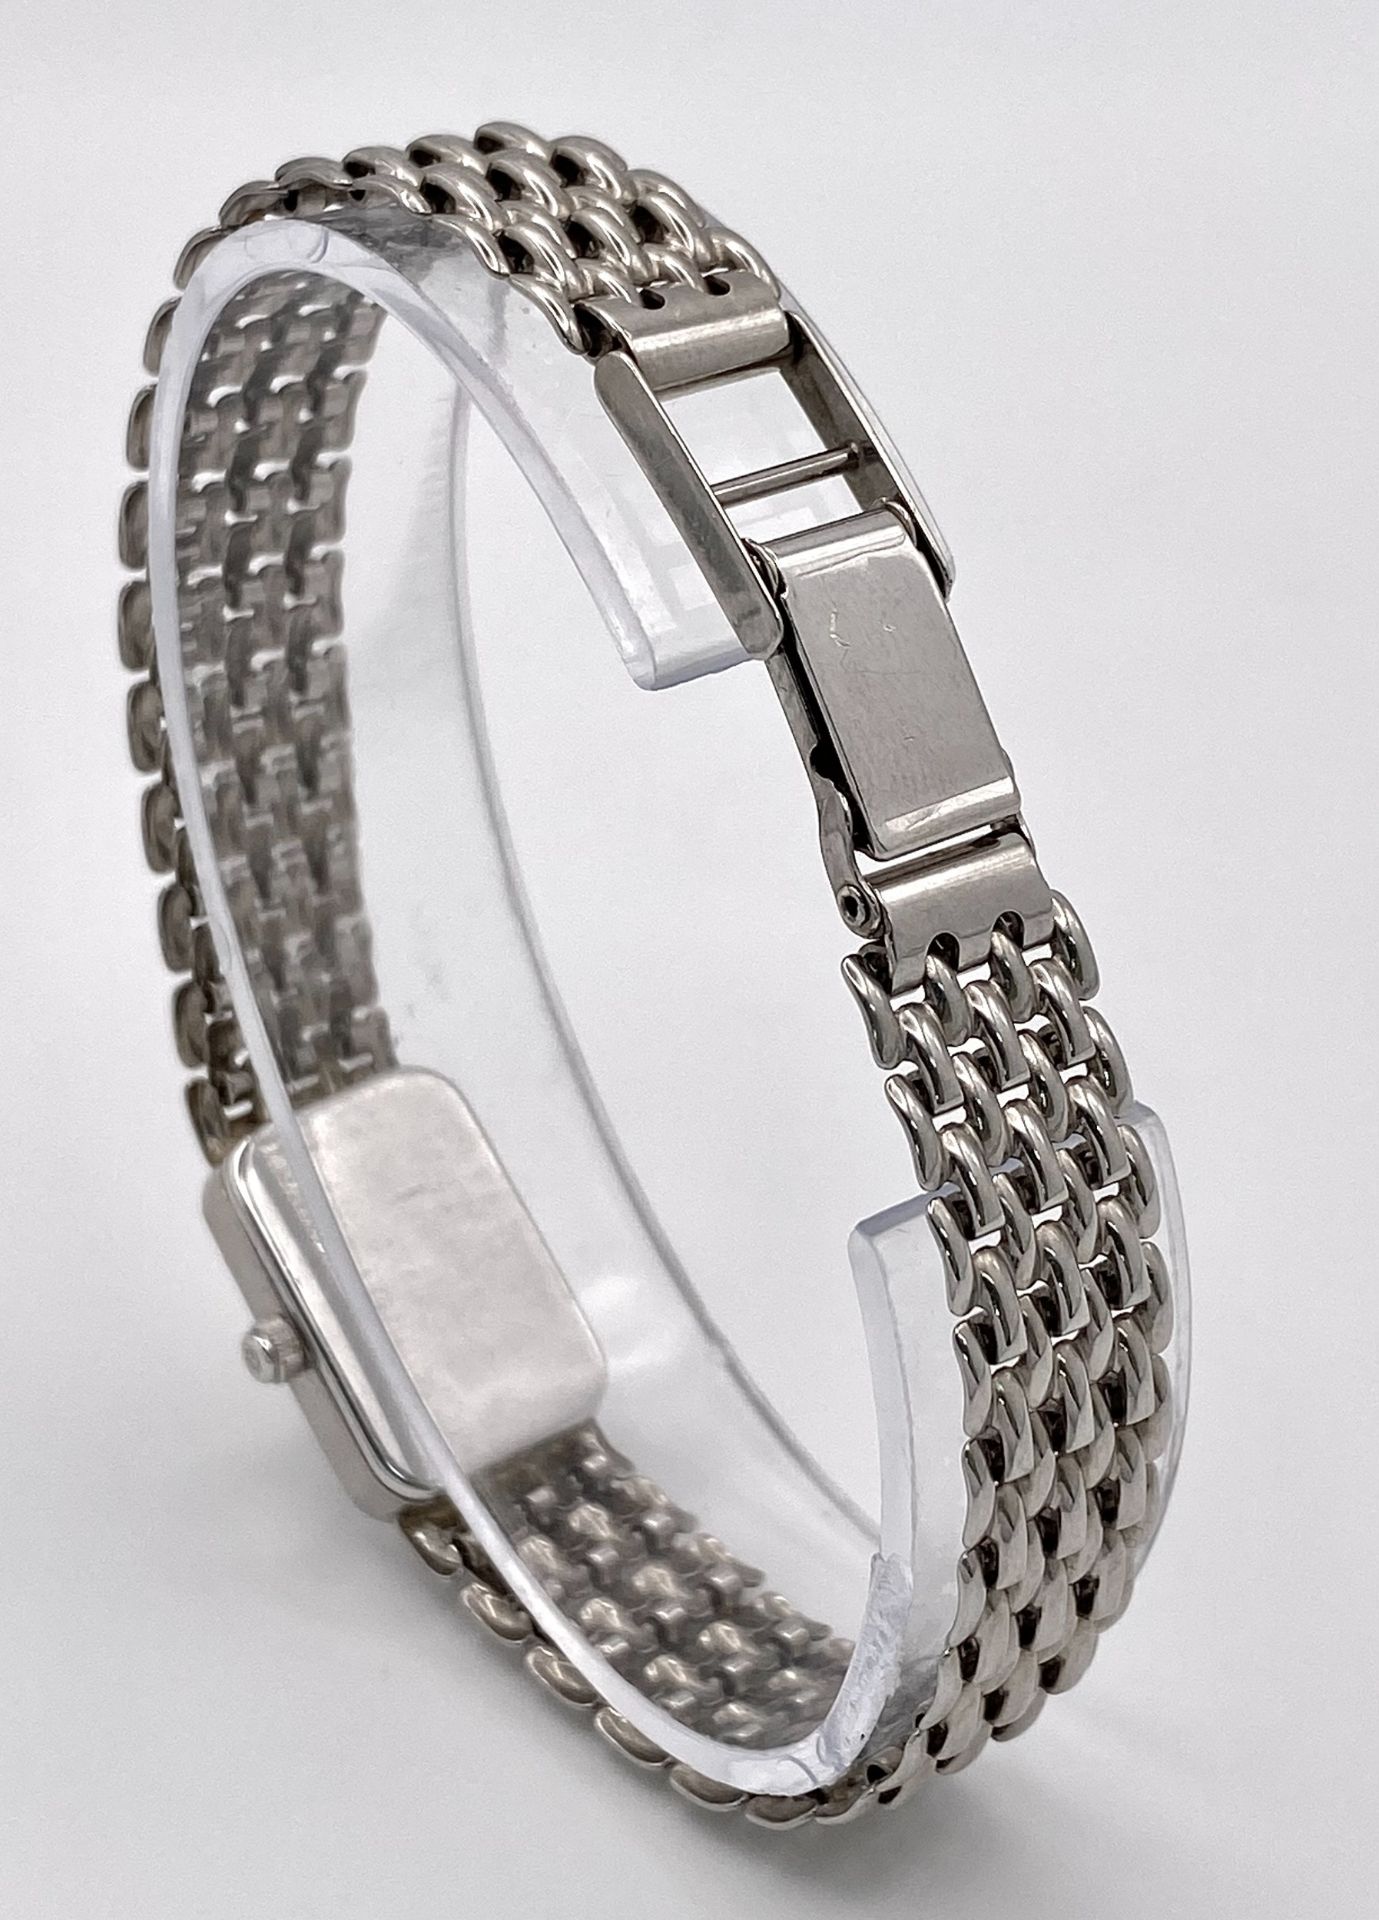 A 9K White Gold Sovereign Quartz Watch. 9K gold bracelet and case - 13mm. White dial. Diamond bezel. - Image 5 of 6